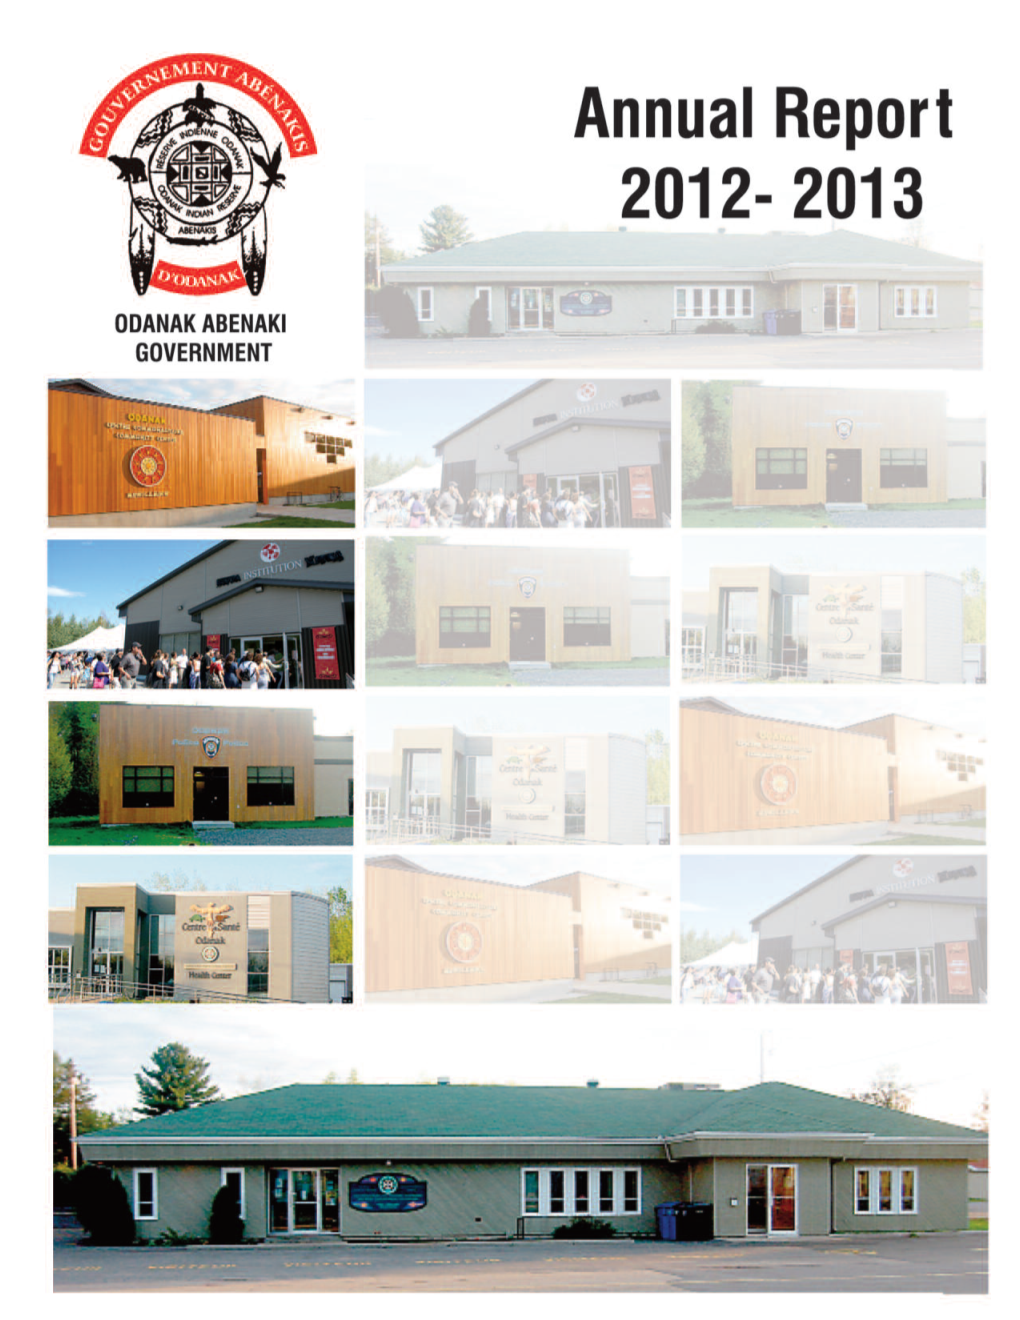 Annual Report, 2012-2013